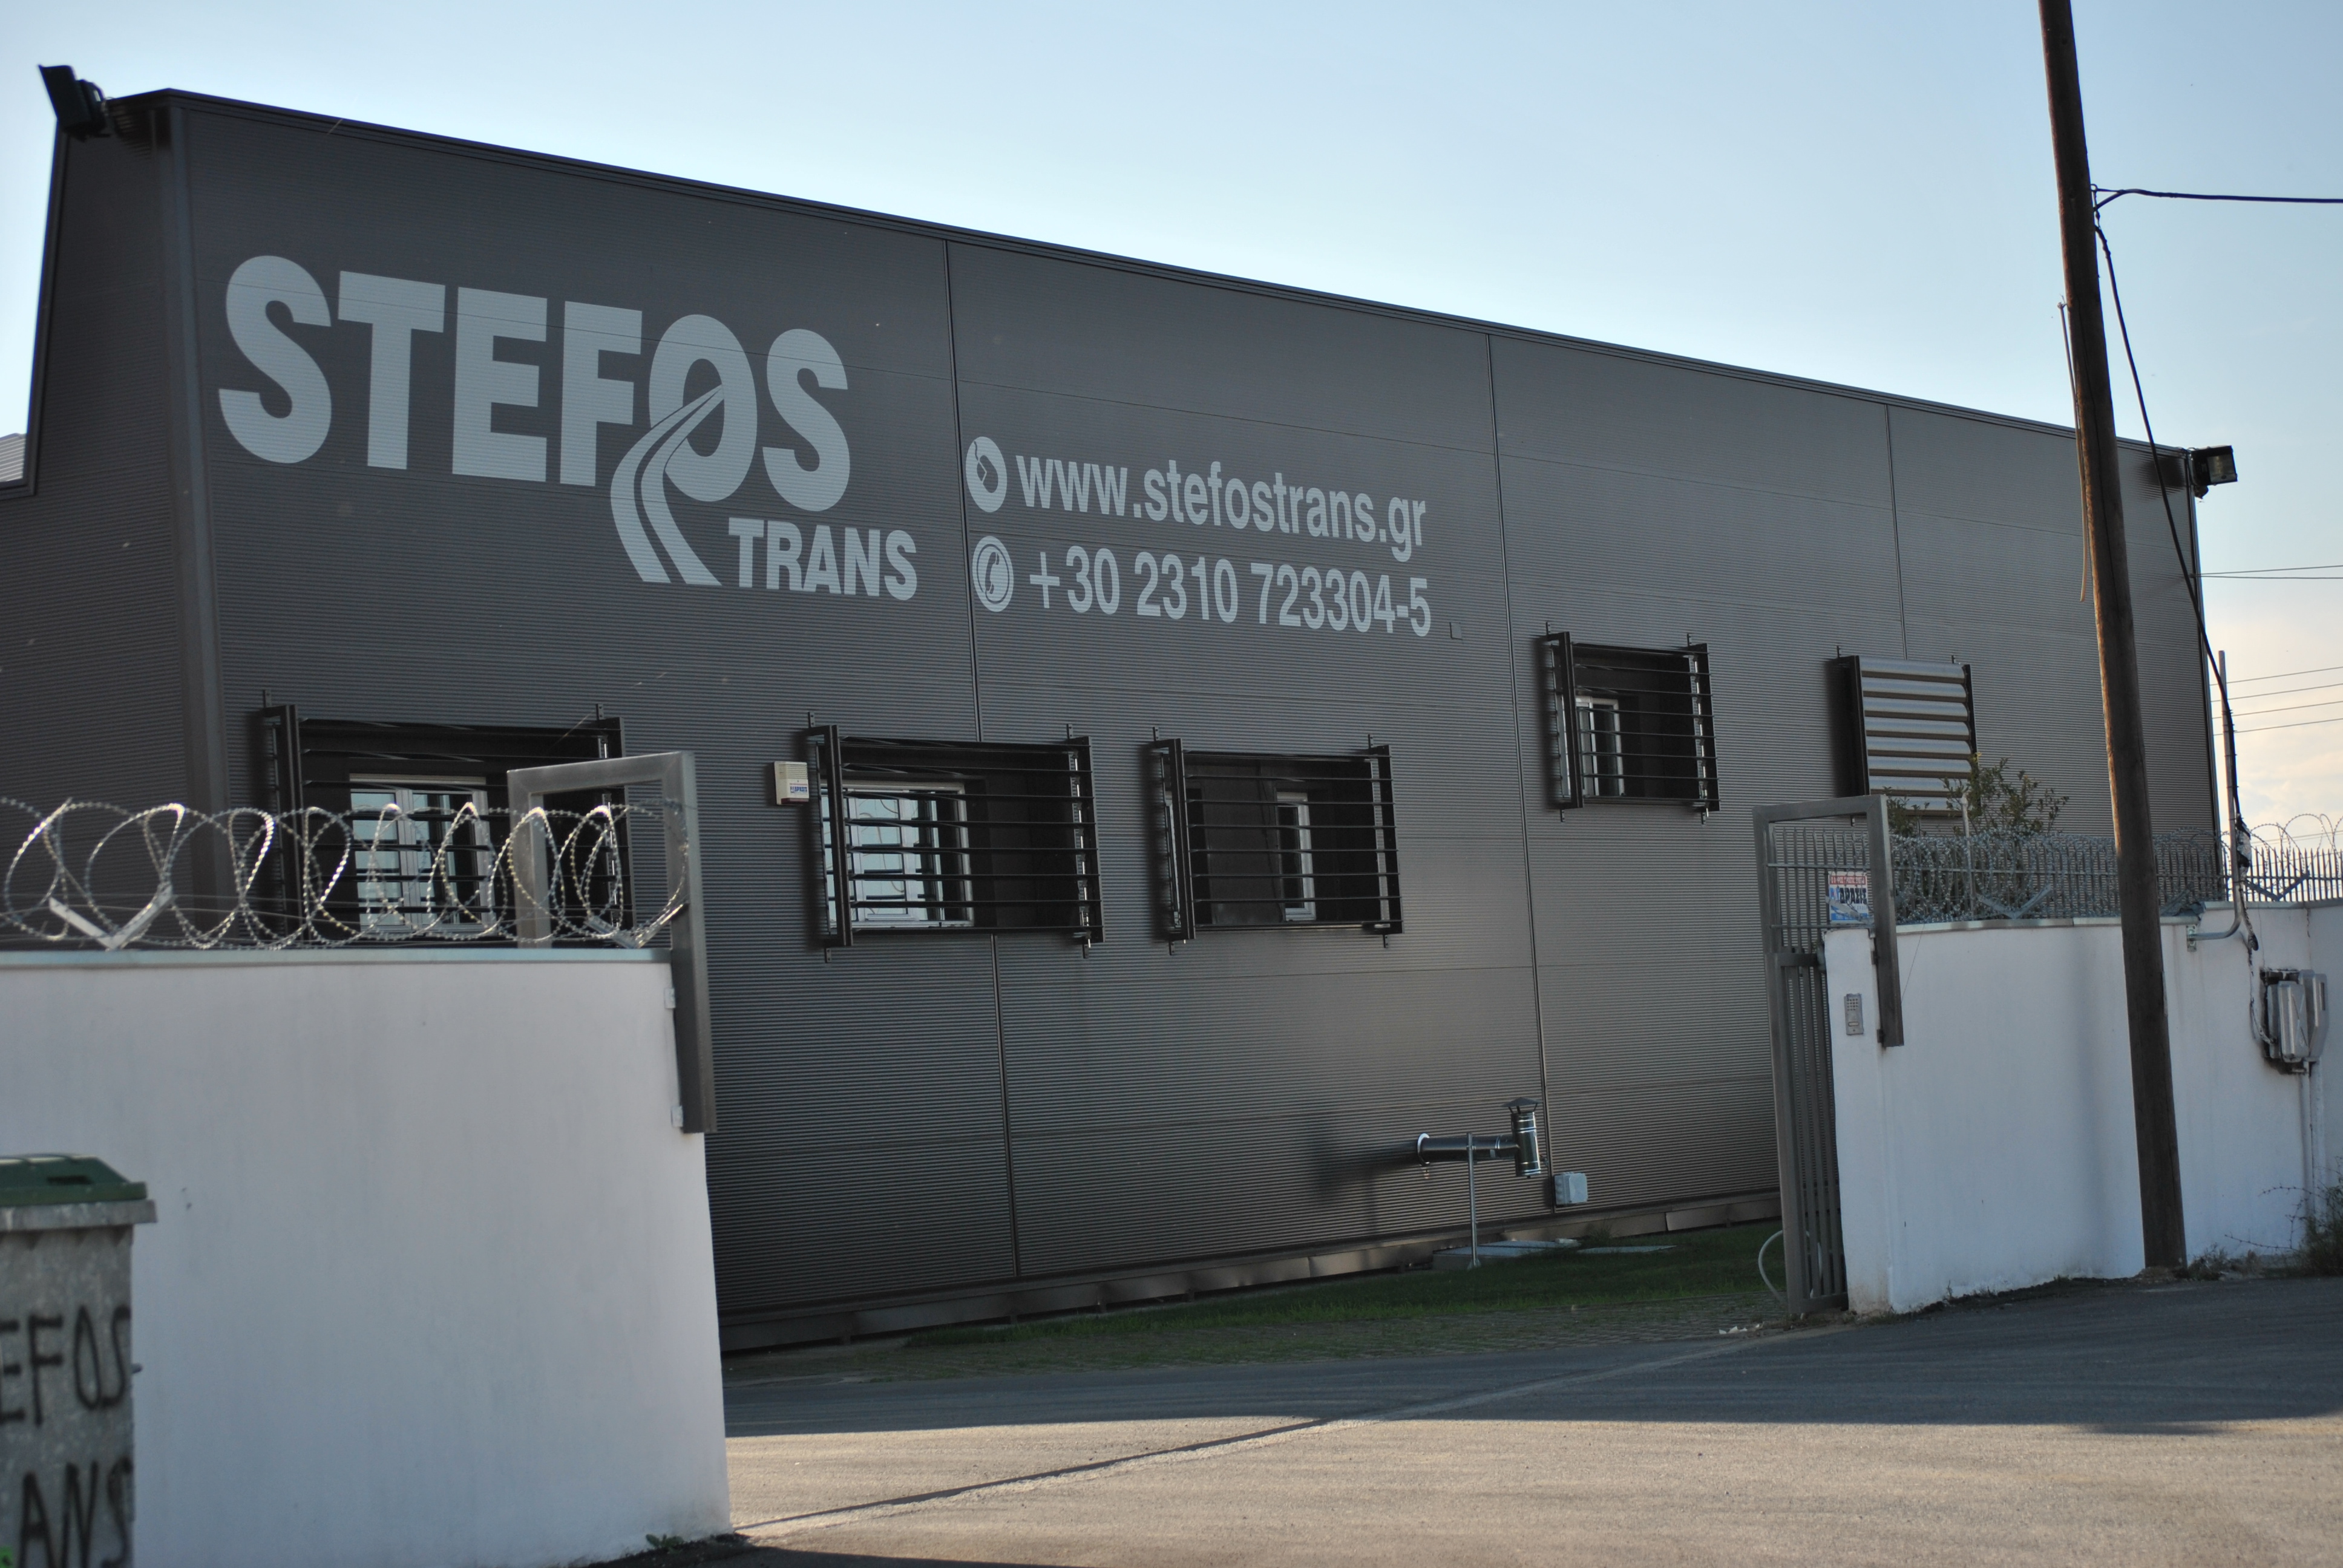 STEFOS TRANS, stefostrans, stefos trans, εταιρεία stefos trans